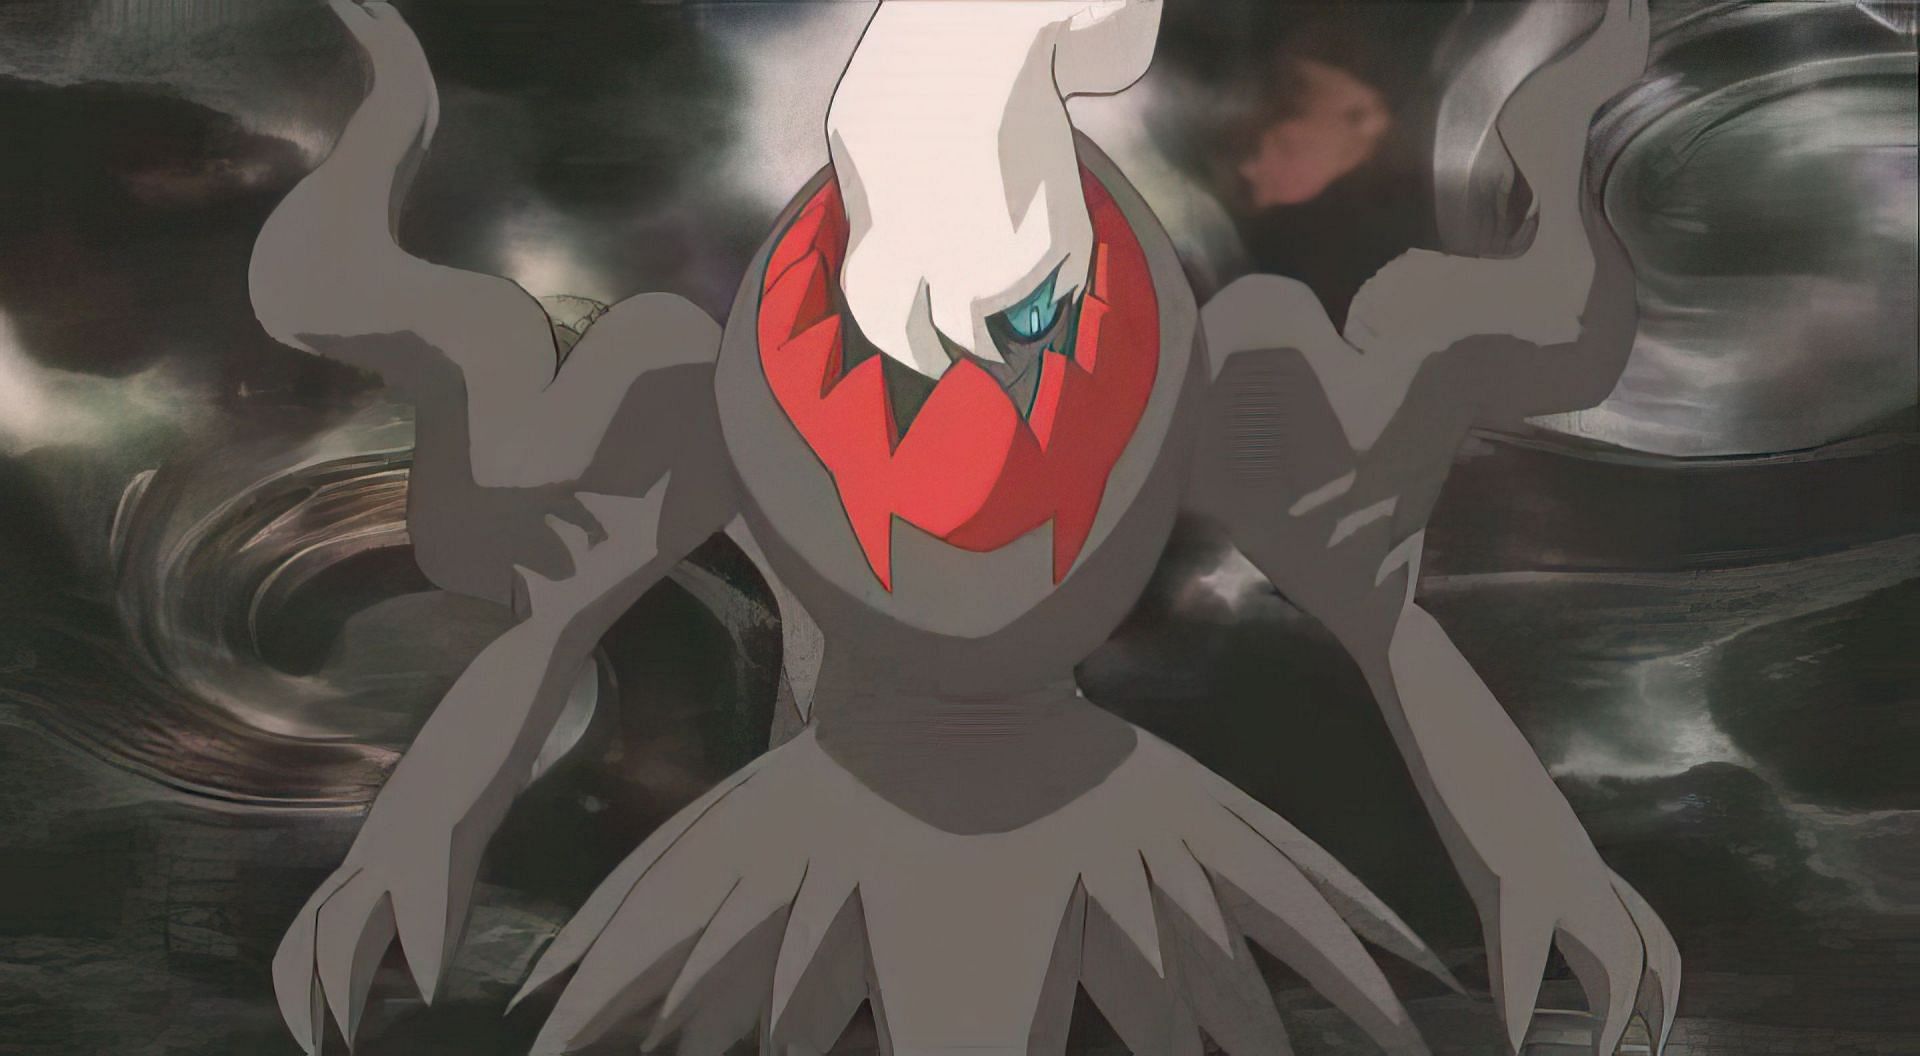 Darkrai as seen in the anime (Image via The Pokemon Company)